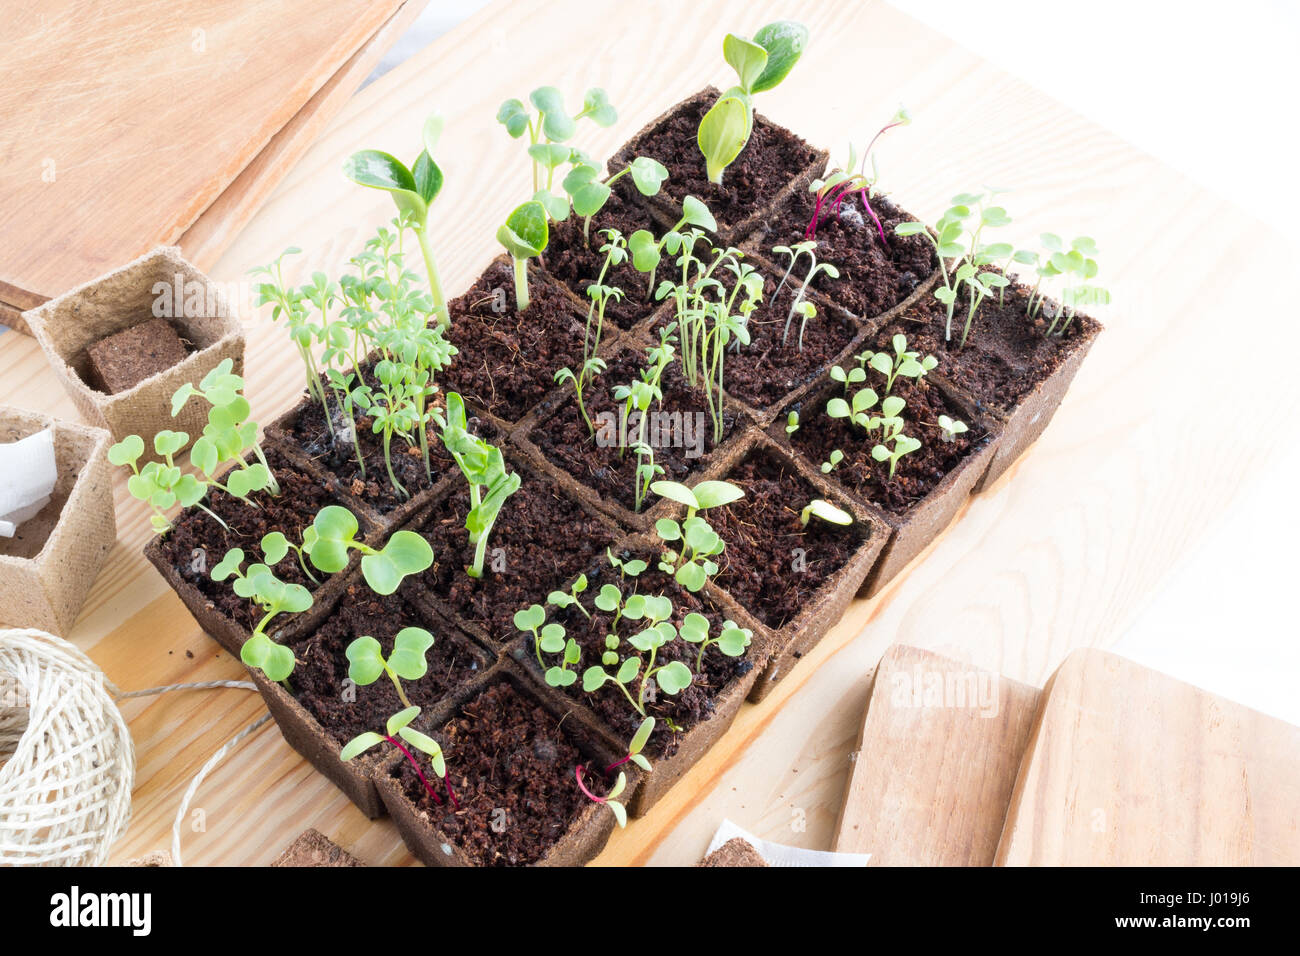 Righe di giovani piantine fresche di varie erbe e verdure in vasi di torba Foto Stock